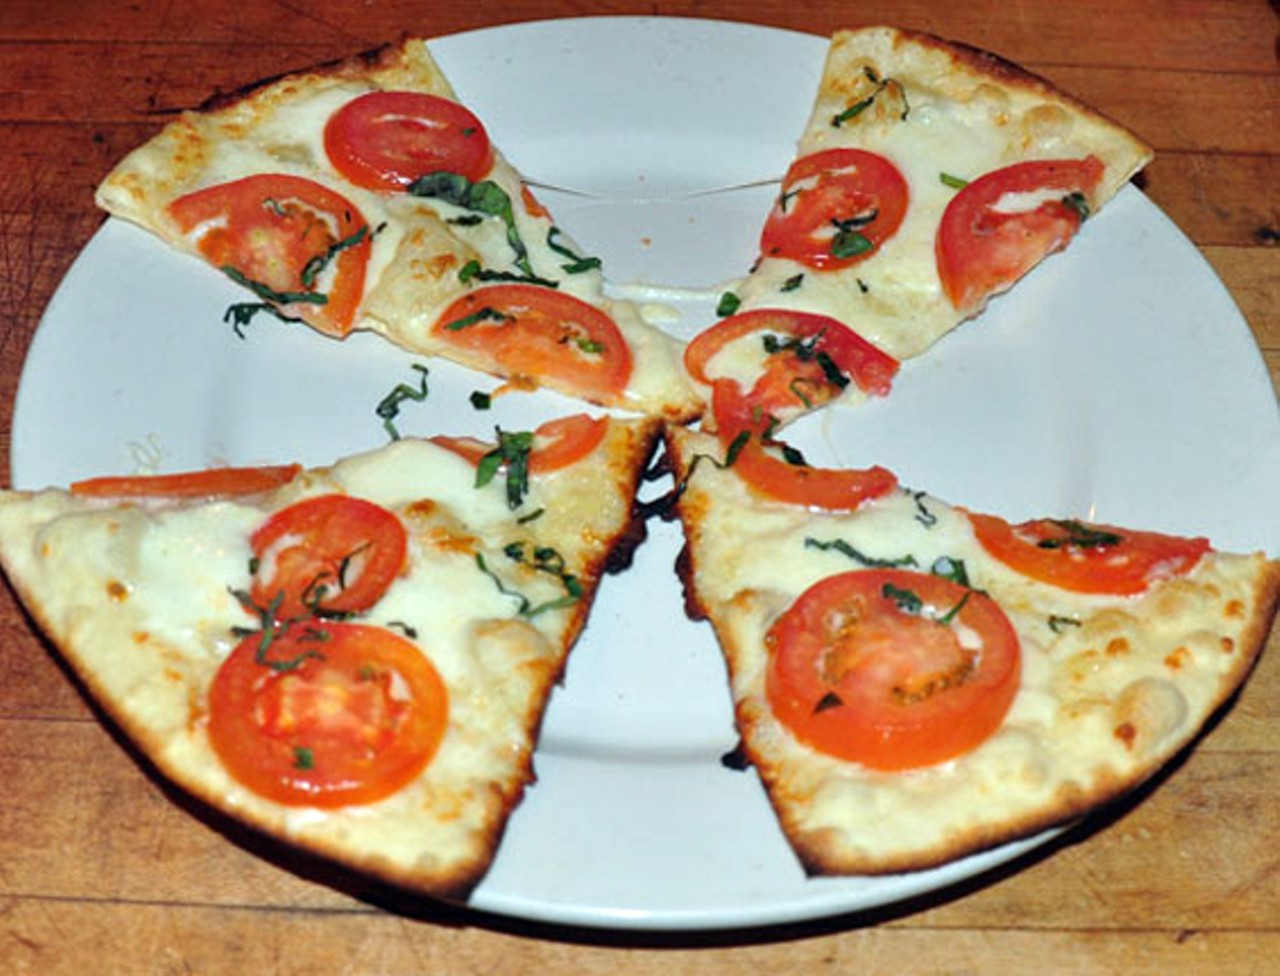 6. Sugo's Margheritta pizza ($10) 
A true Italian pizza: sans sauce and thin crust. Original post.